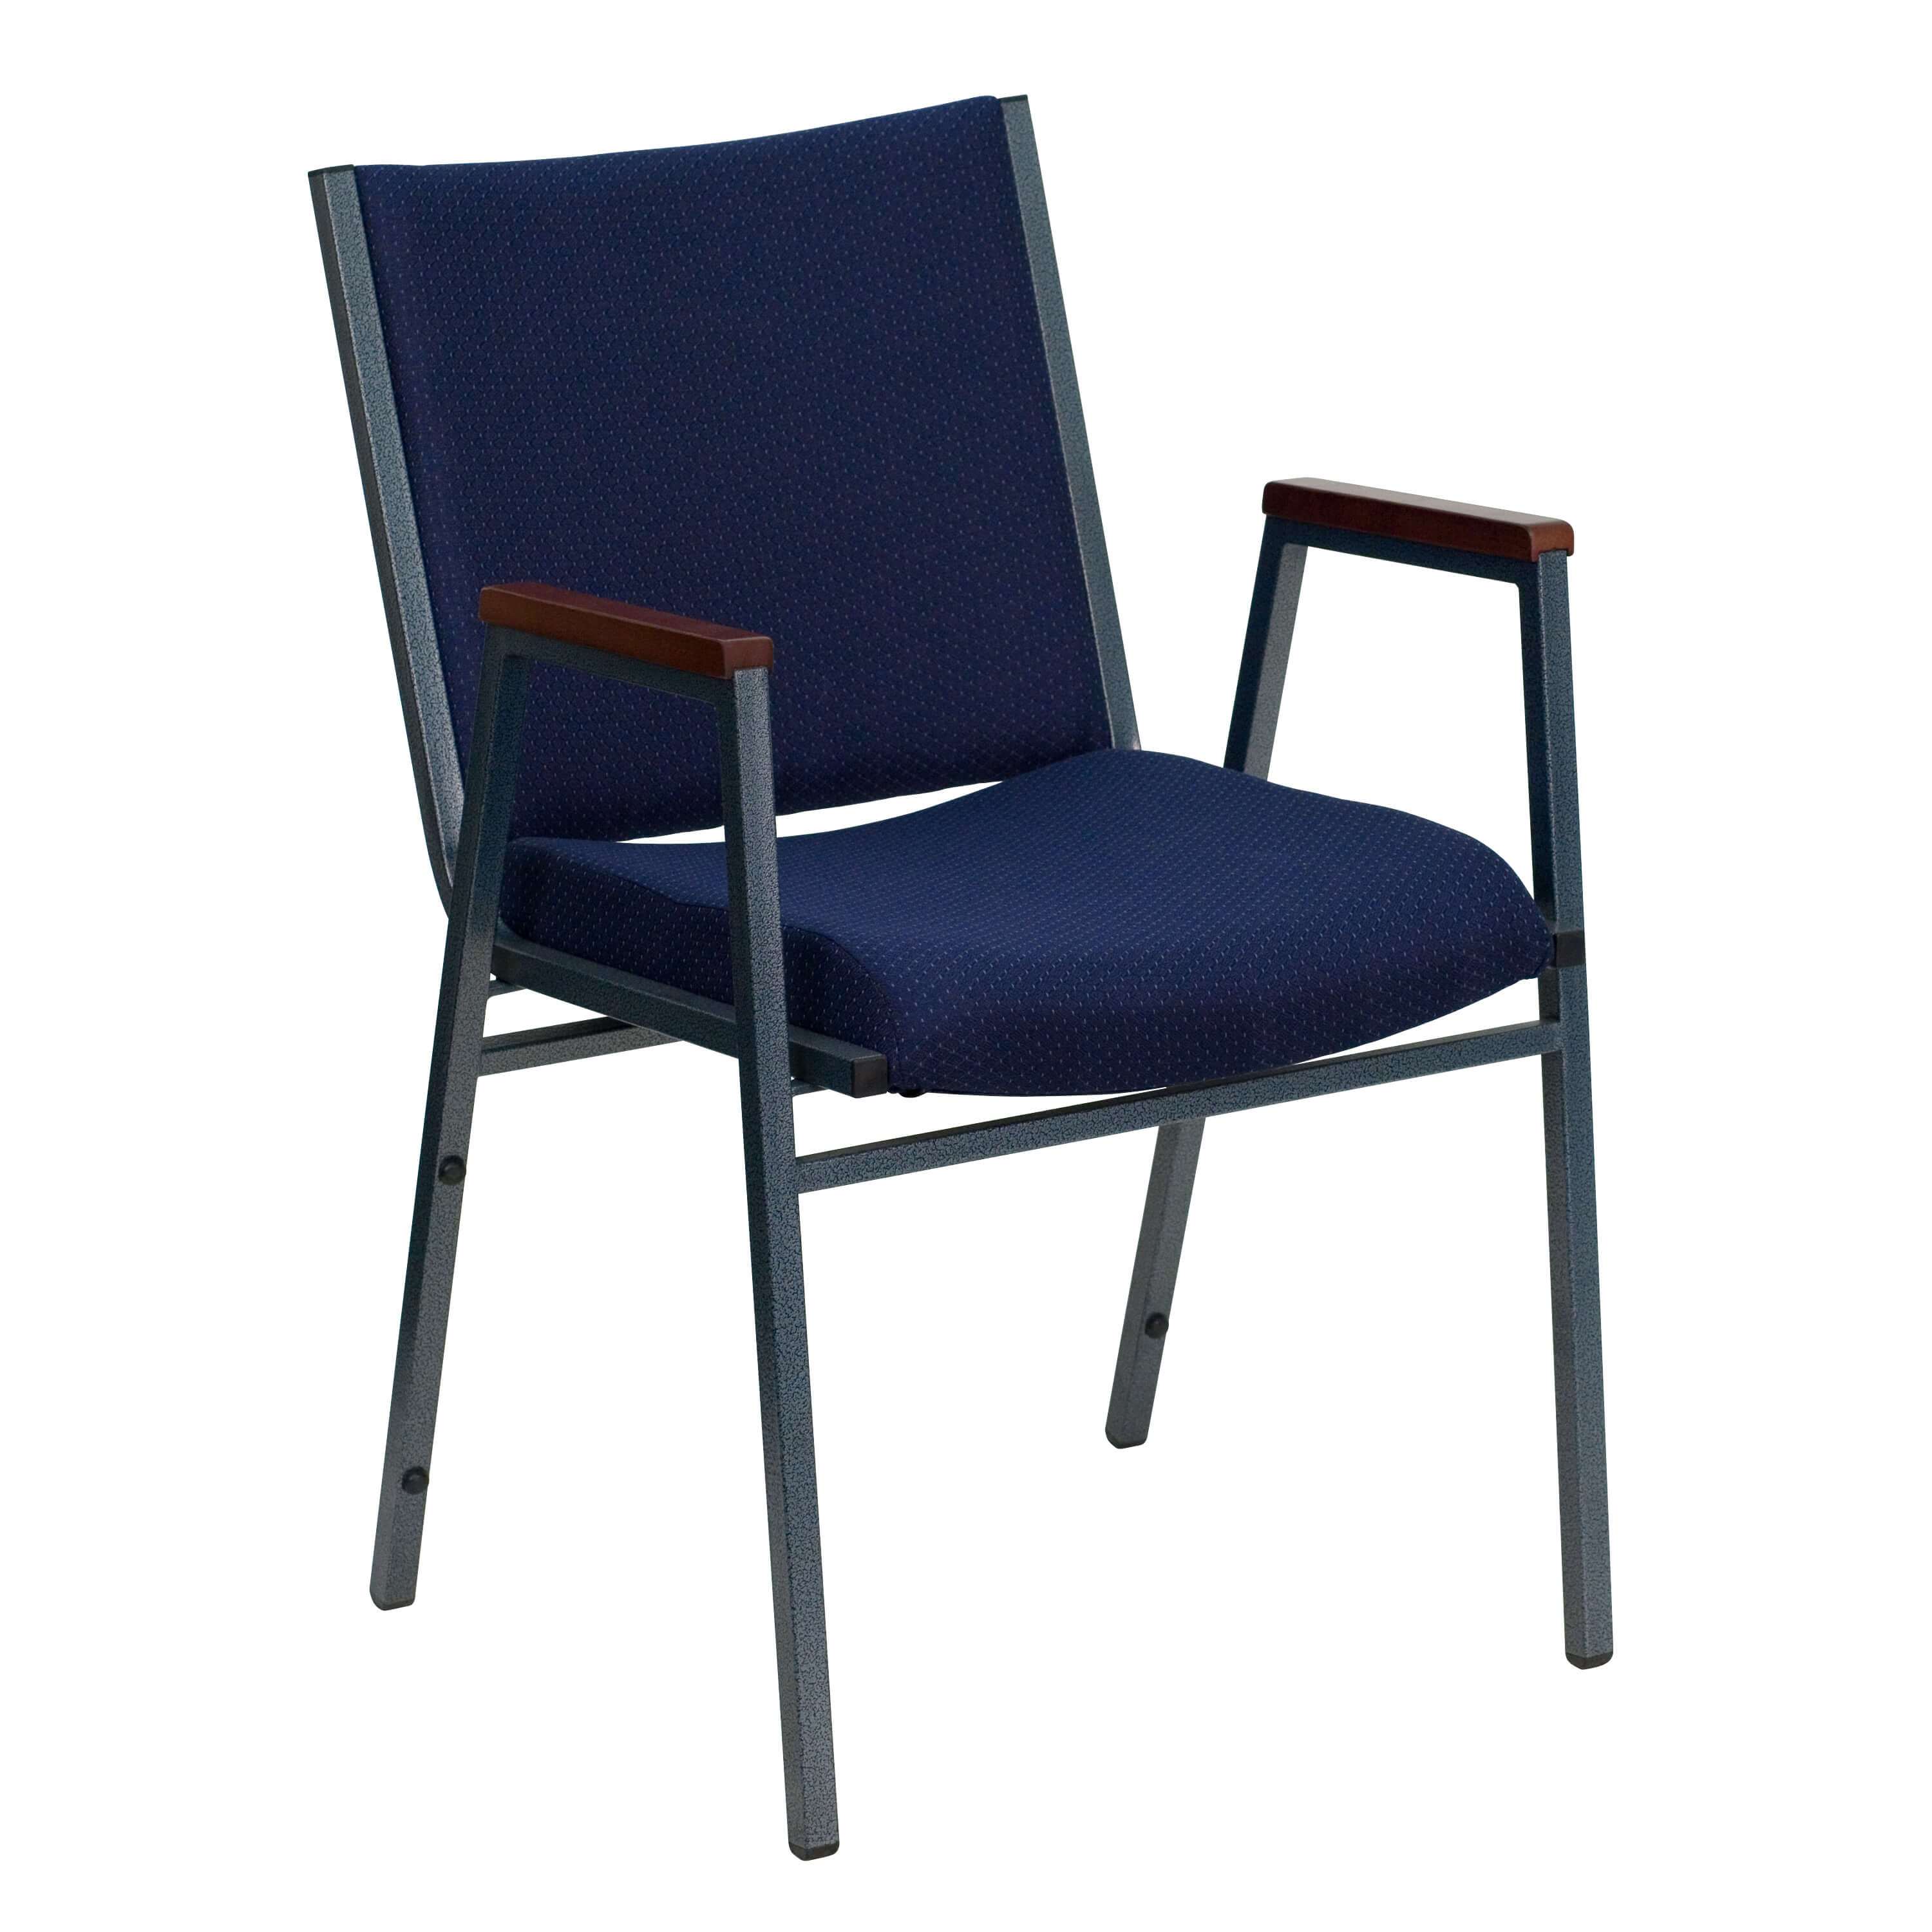 Stackable chairs CUB XU 60154 NVY GG FLA